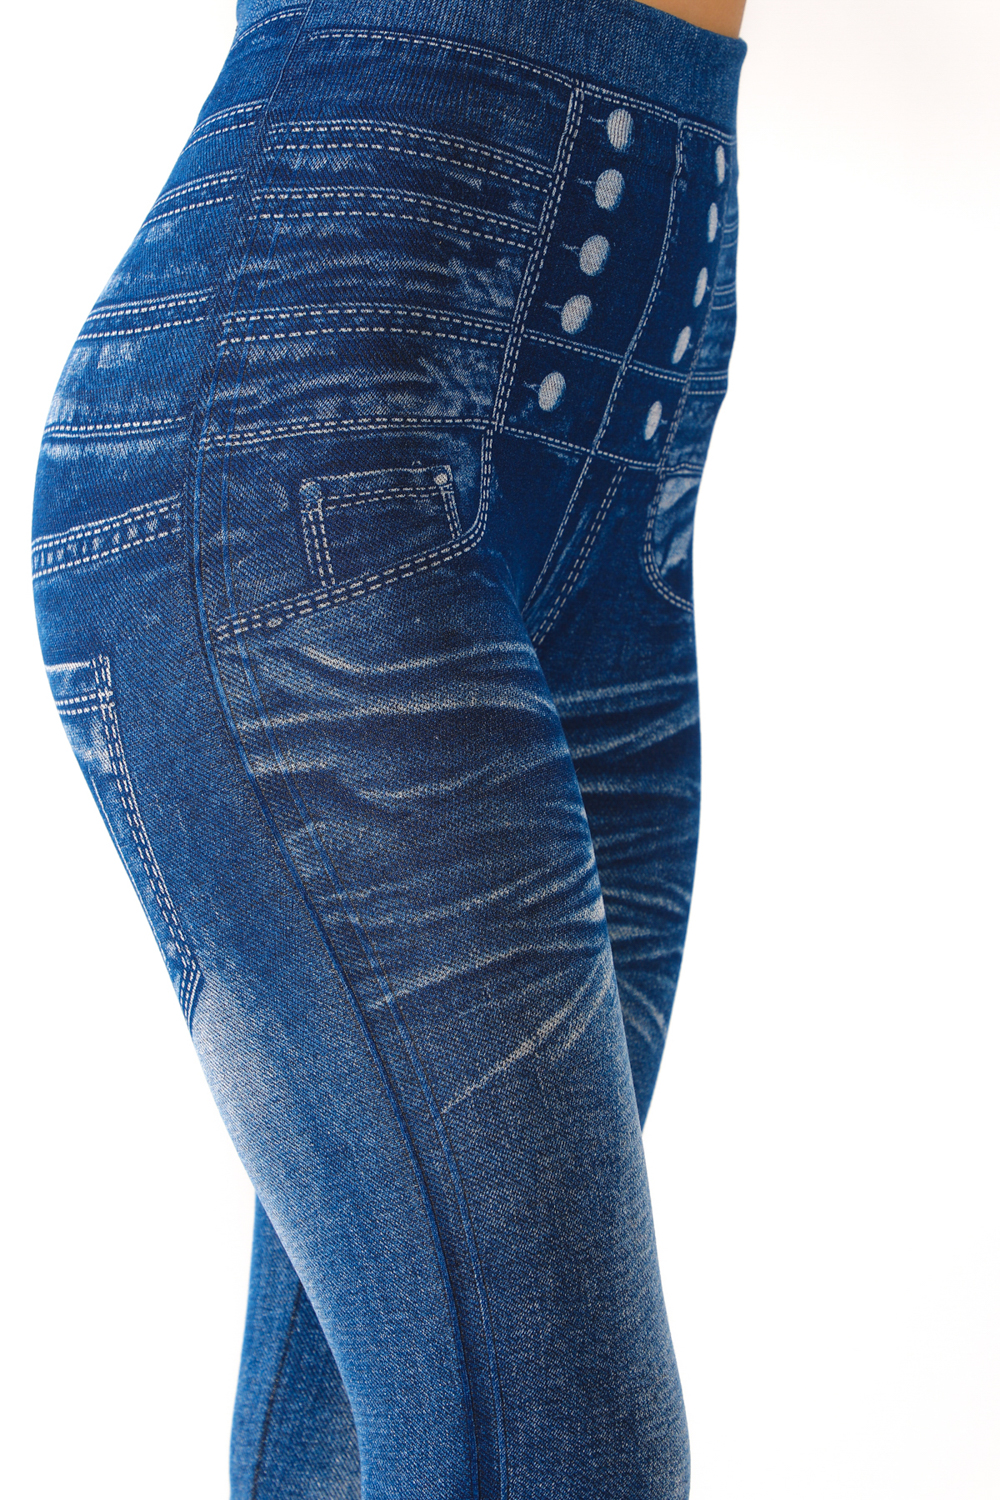 NEW Women Faux Denim Jeans Leggings Butterfly Printed Pencil Slim